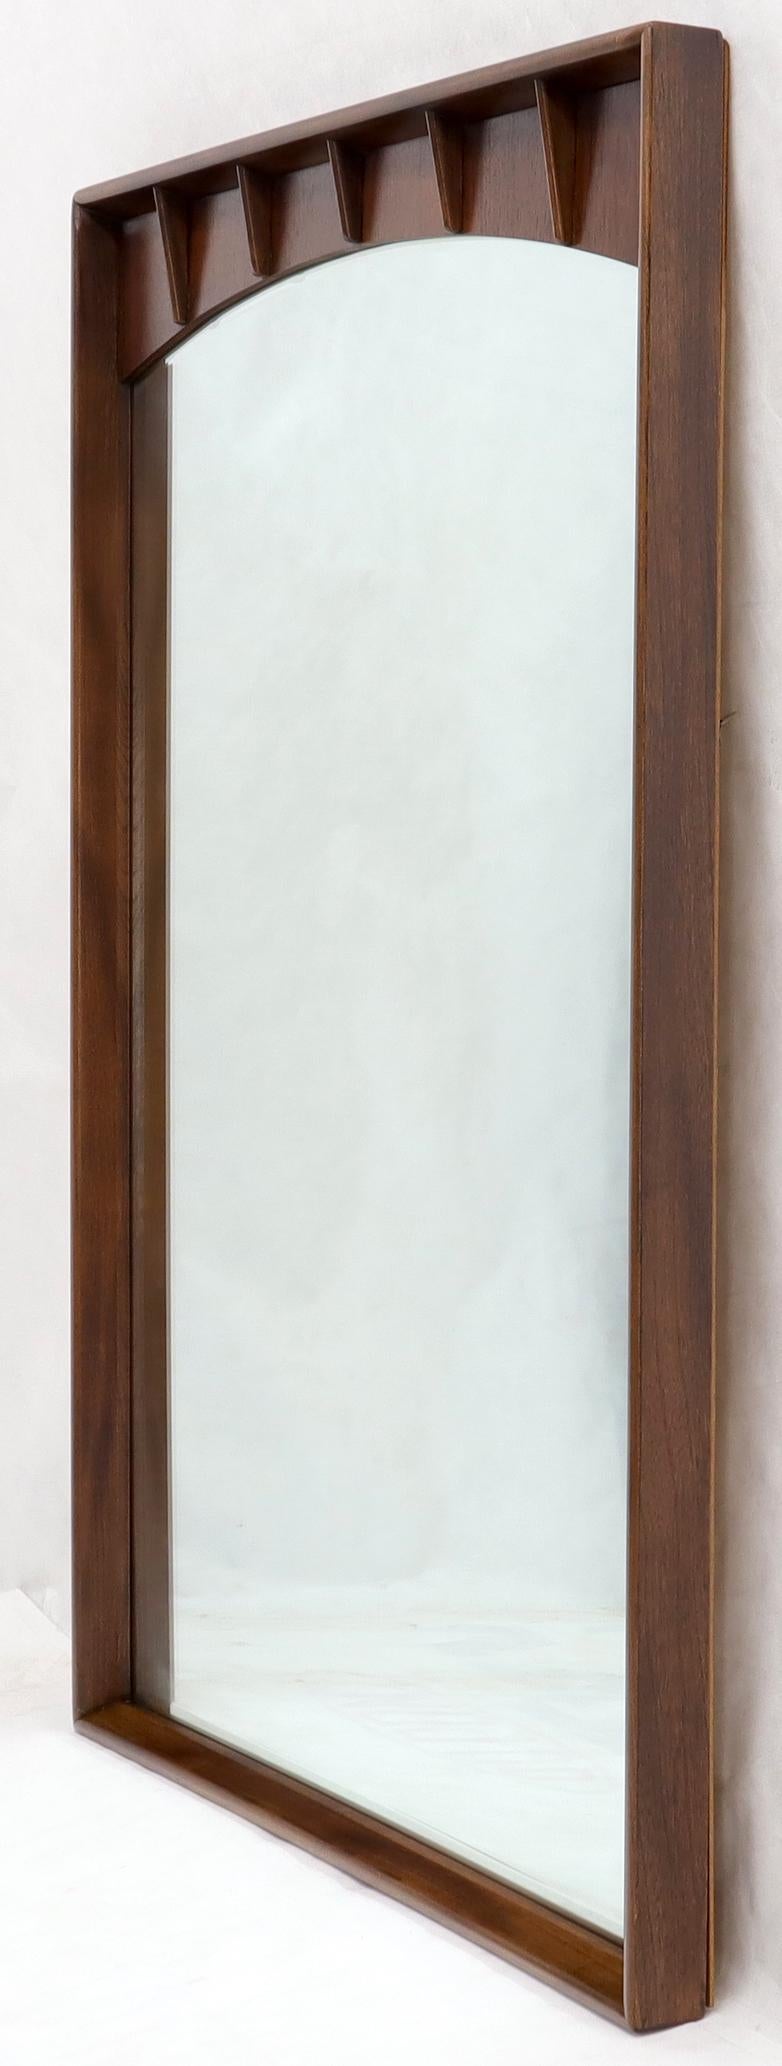 midcentury modern wall mirror